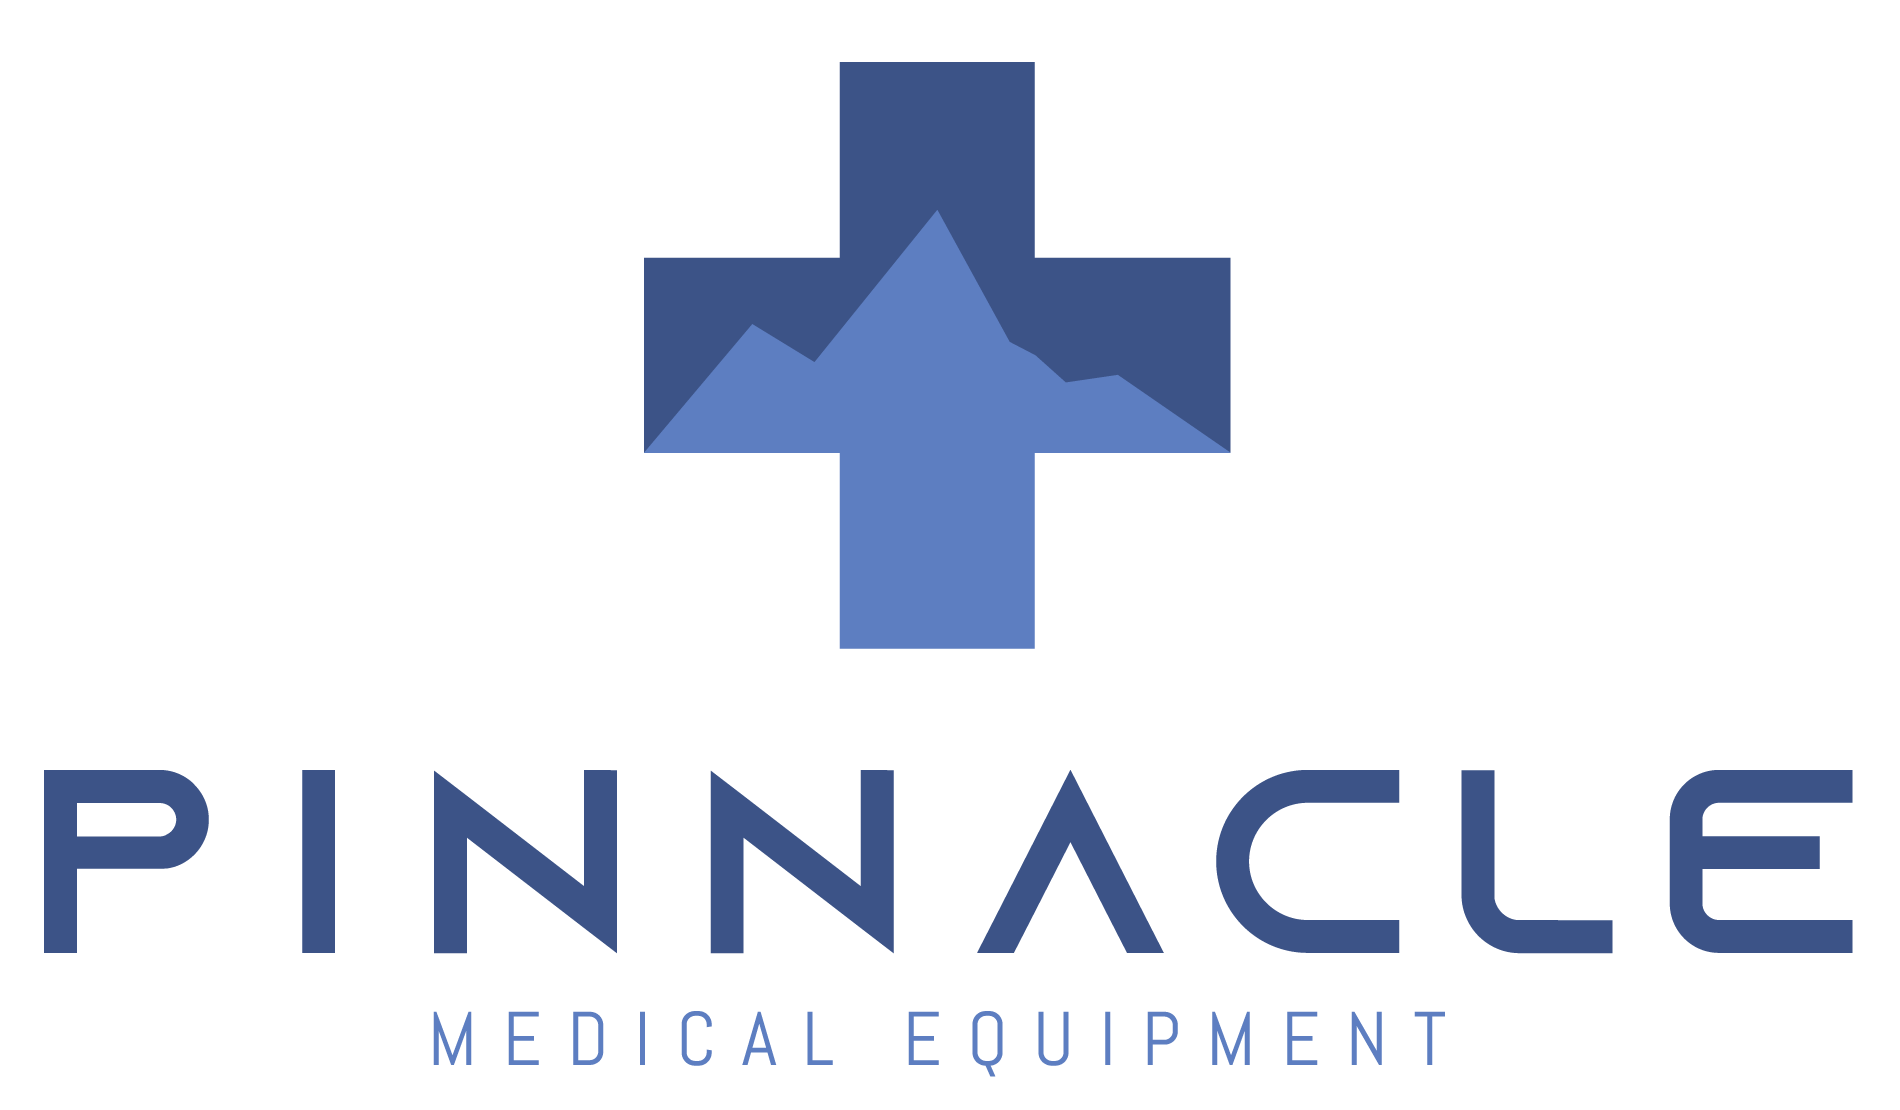 Pinnacle Medical Equipment